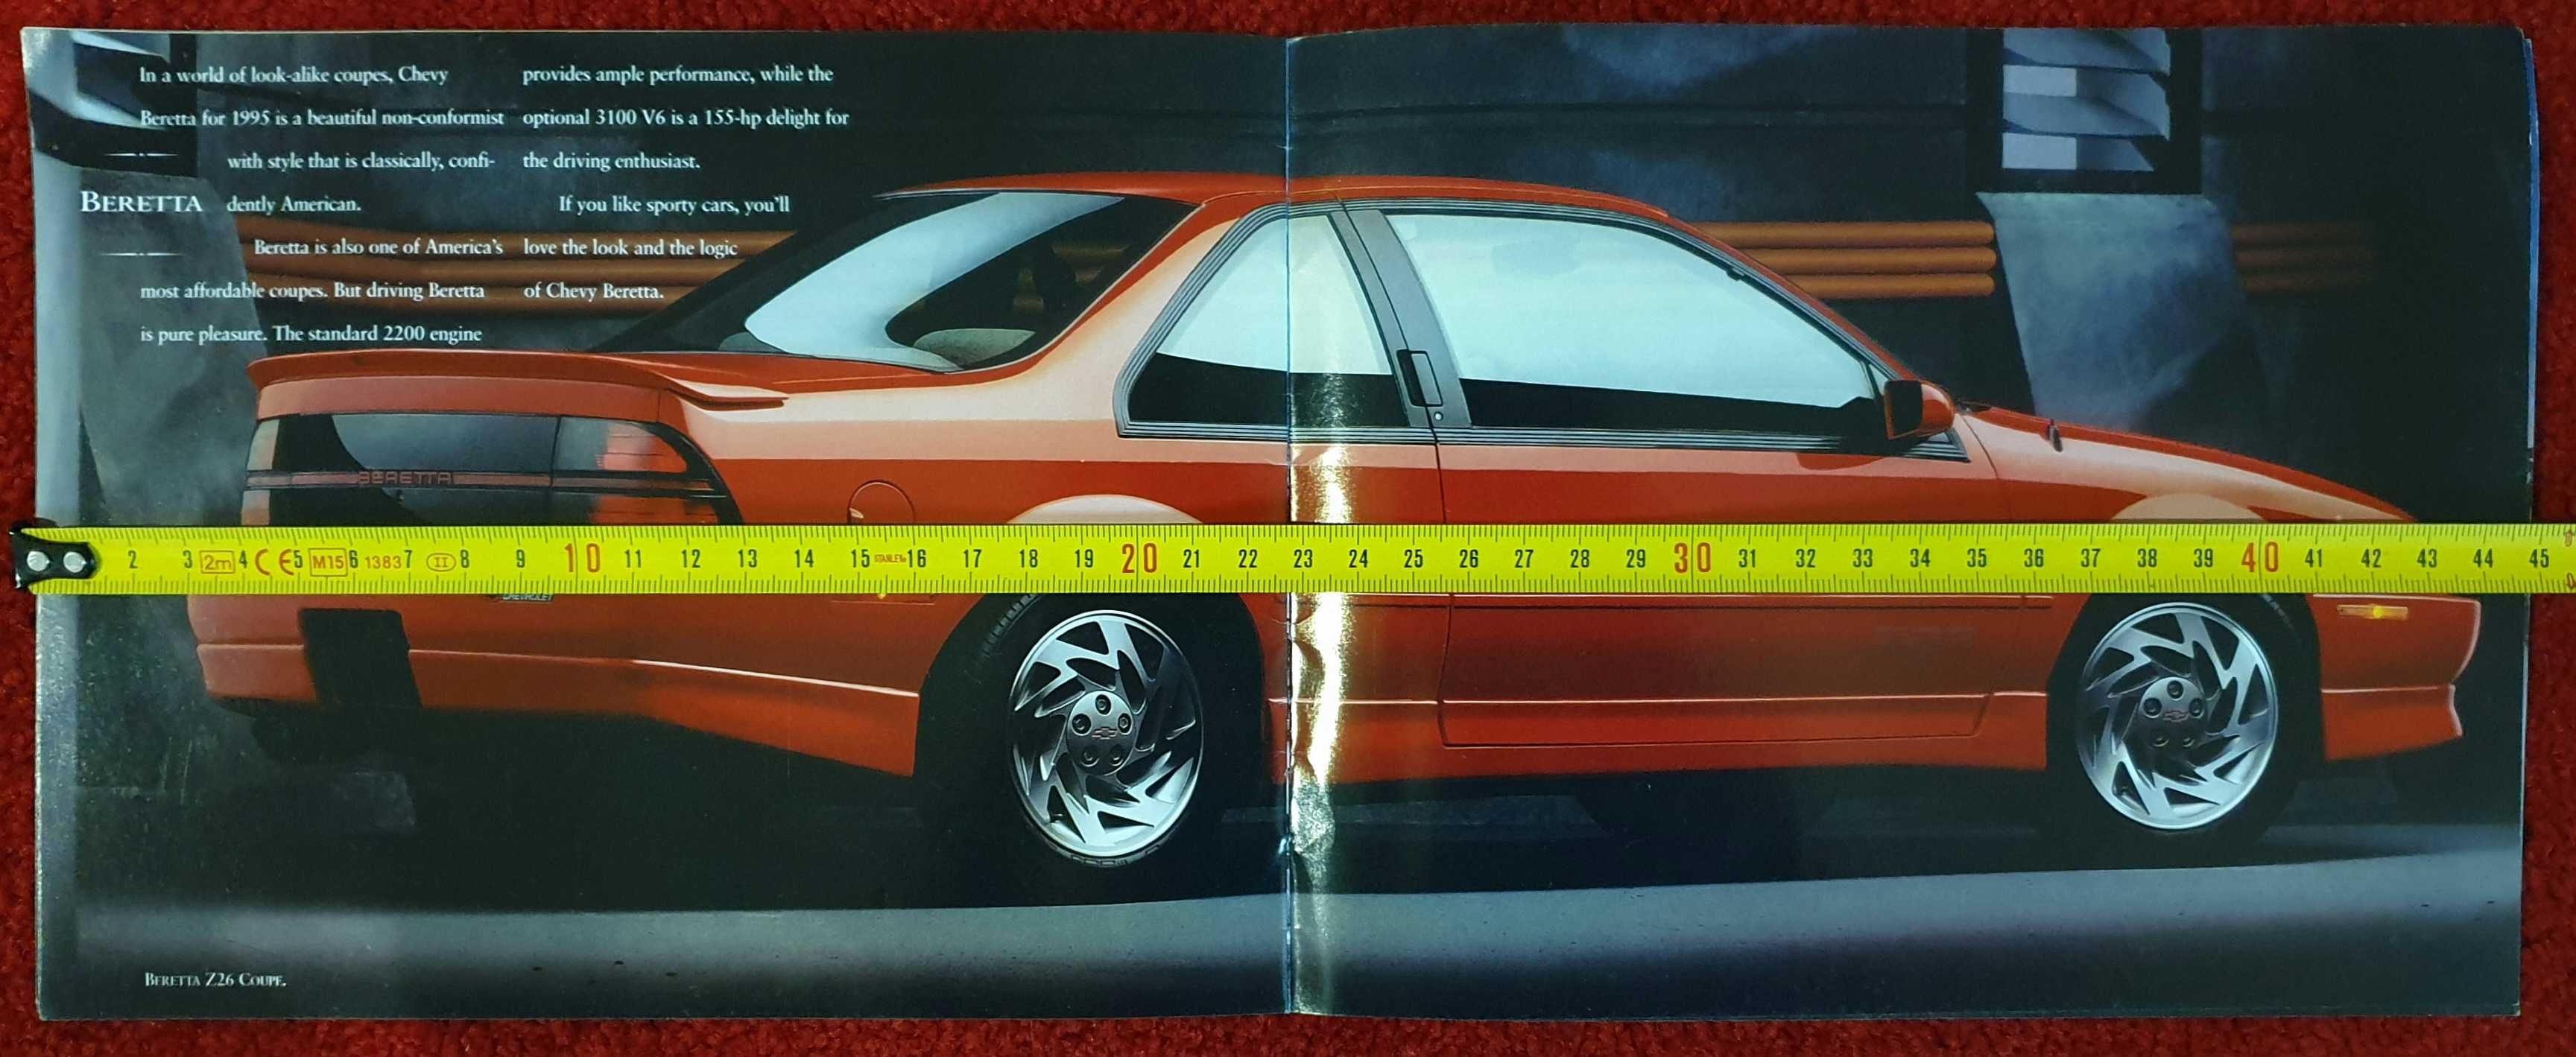 Prospekt, katalog Chevrolet 1995, 20 stron.